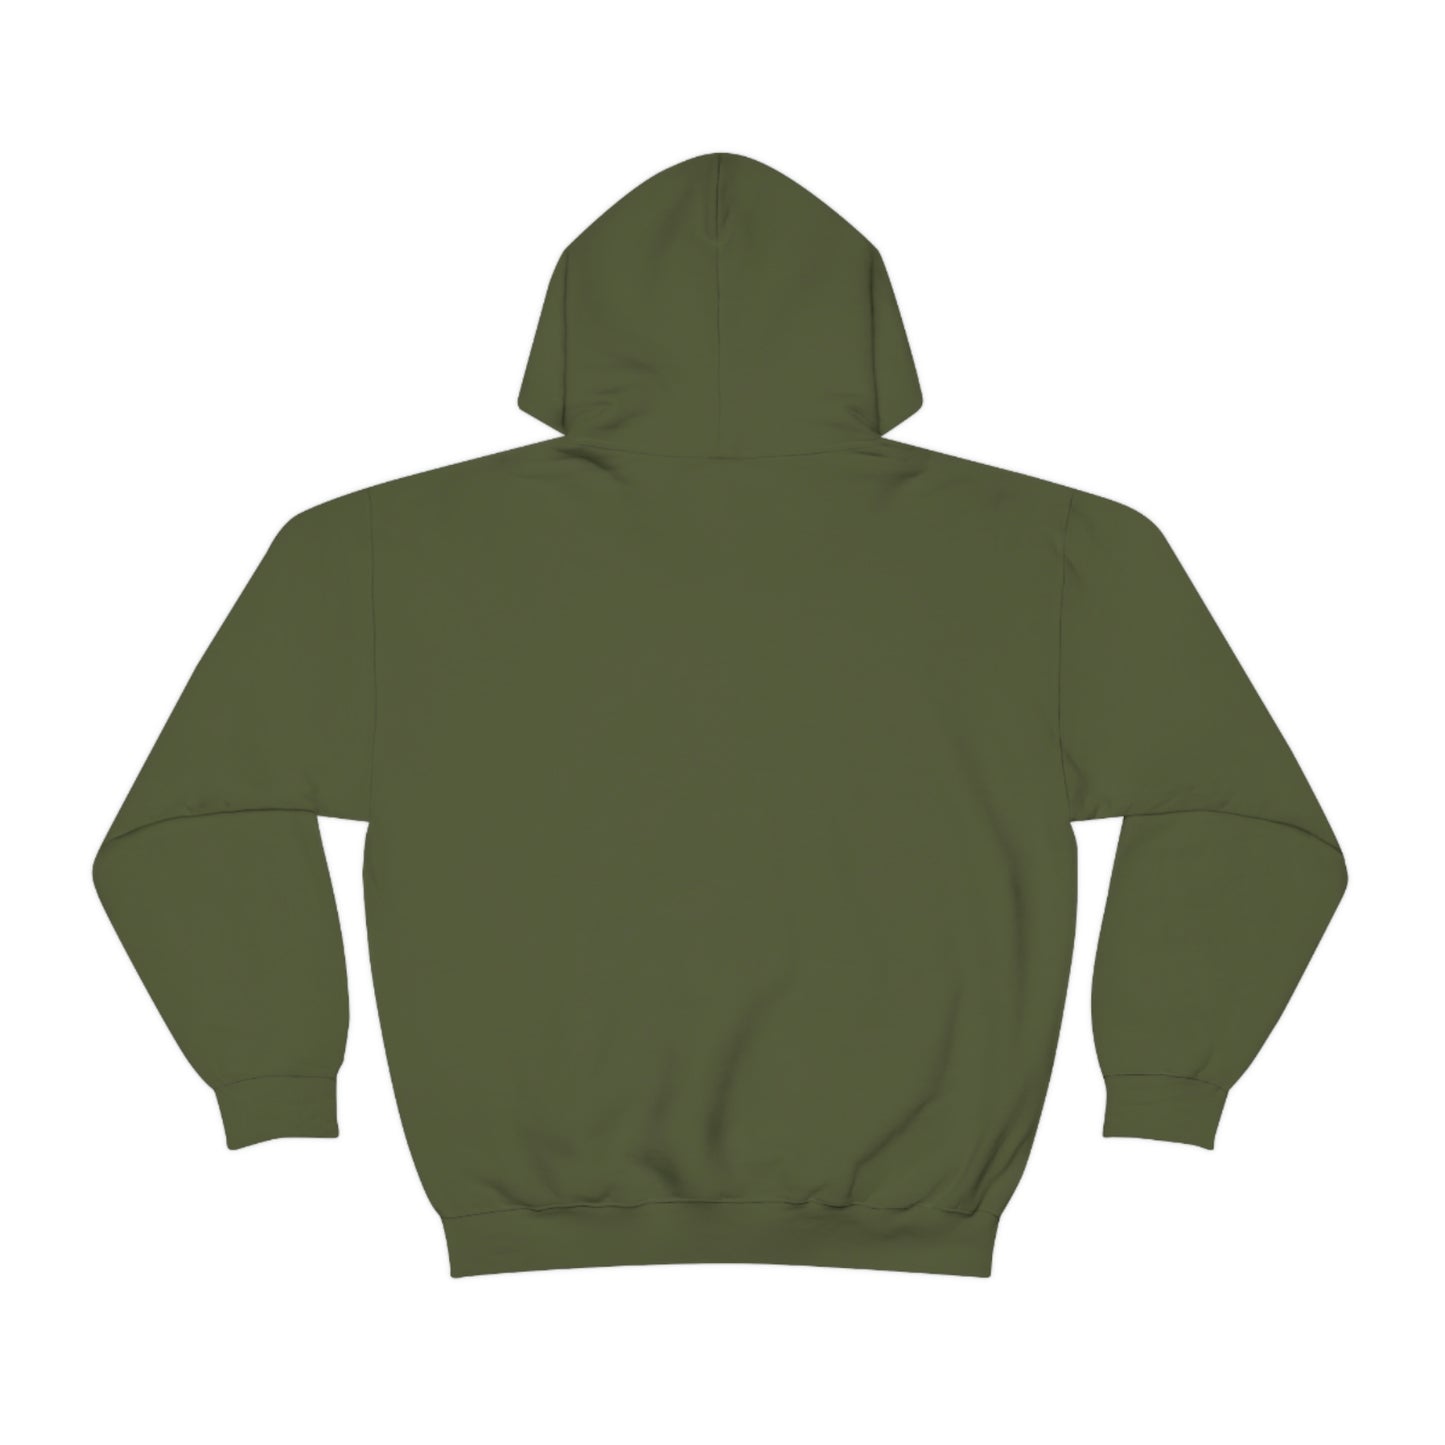 DG Elite Heavy Blend™ Hooded Sweatshirt - Front Side Only